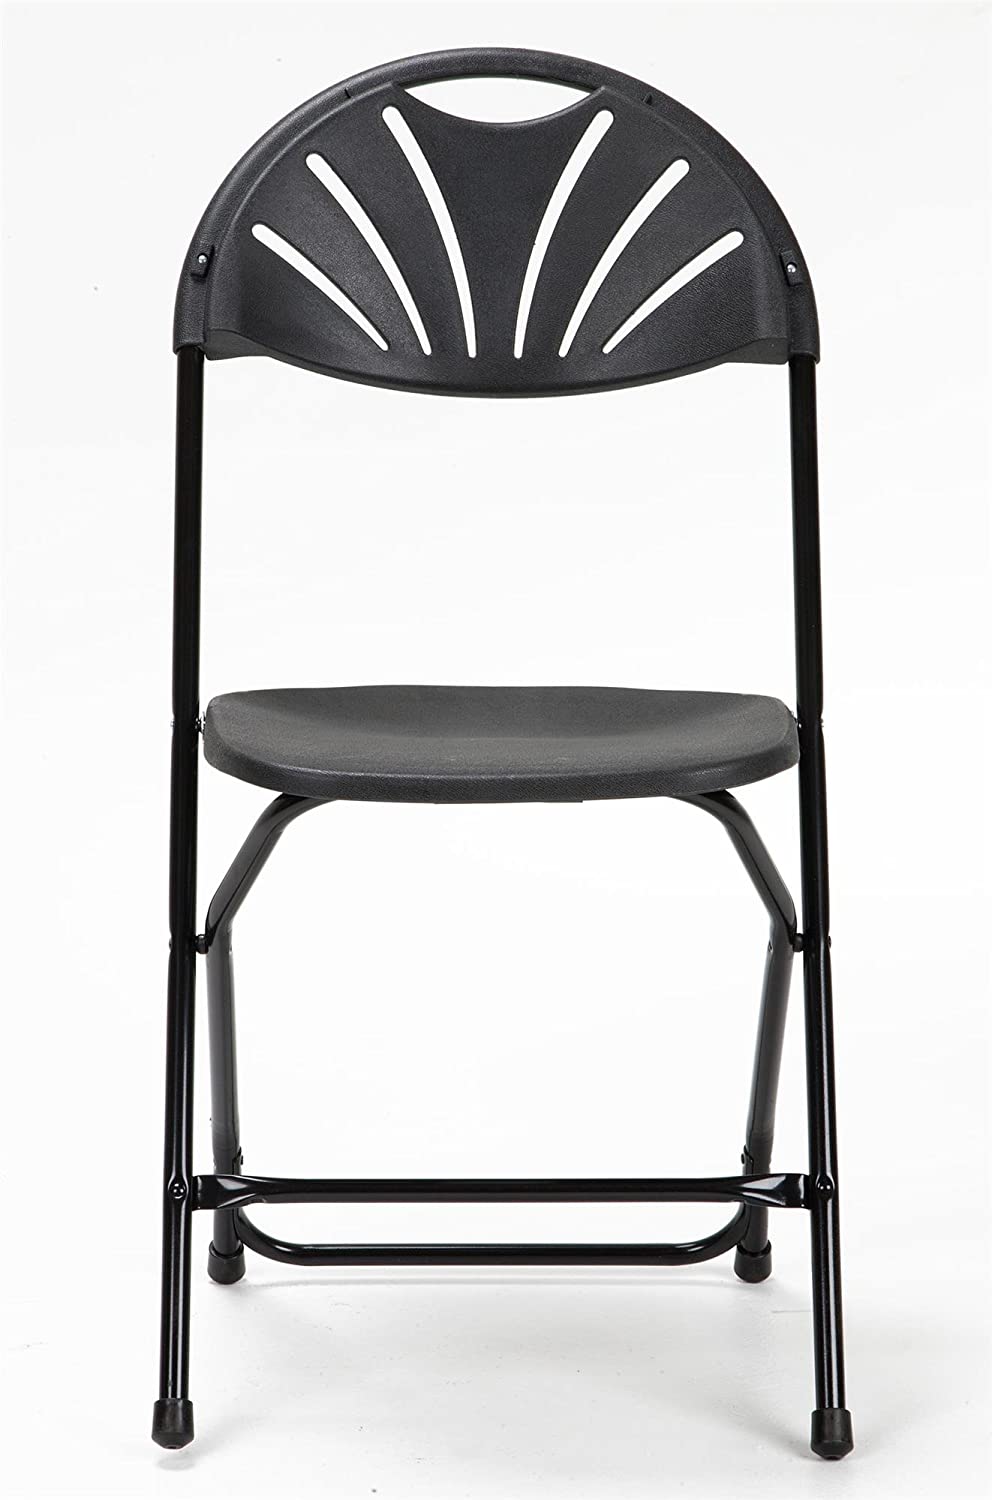 Cosco Folding Chair, 8 Pack, Black